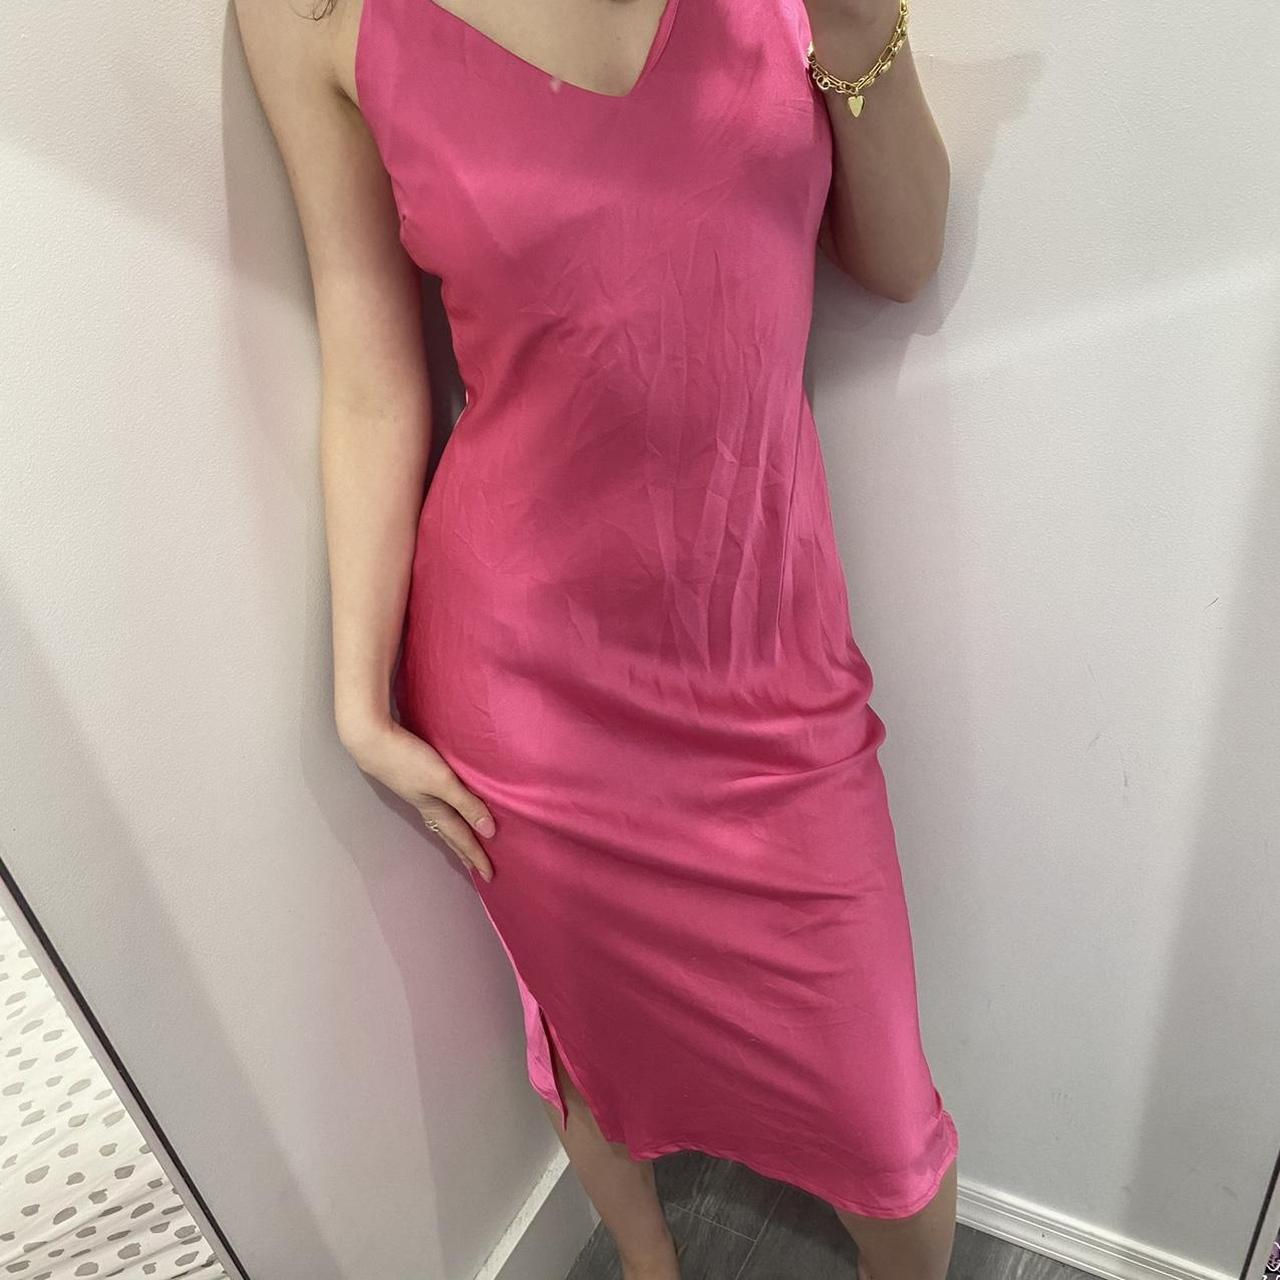 Product Image 2 - hot pink satin slip dress.